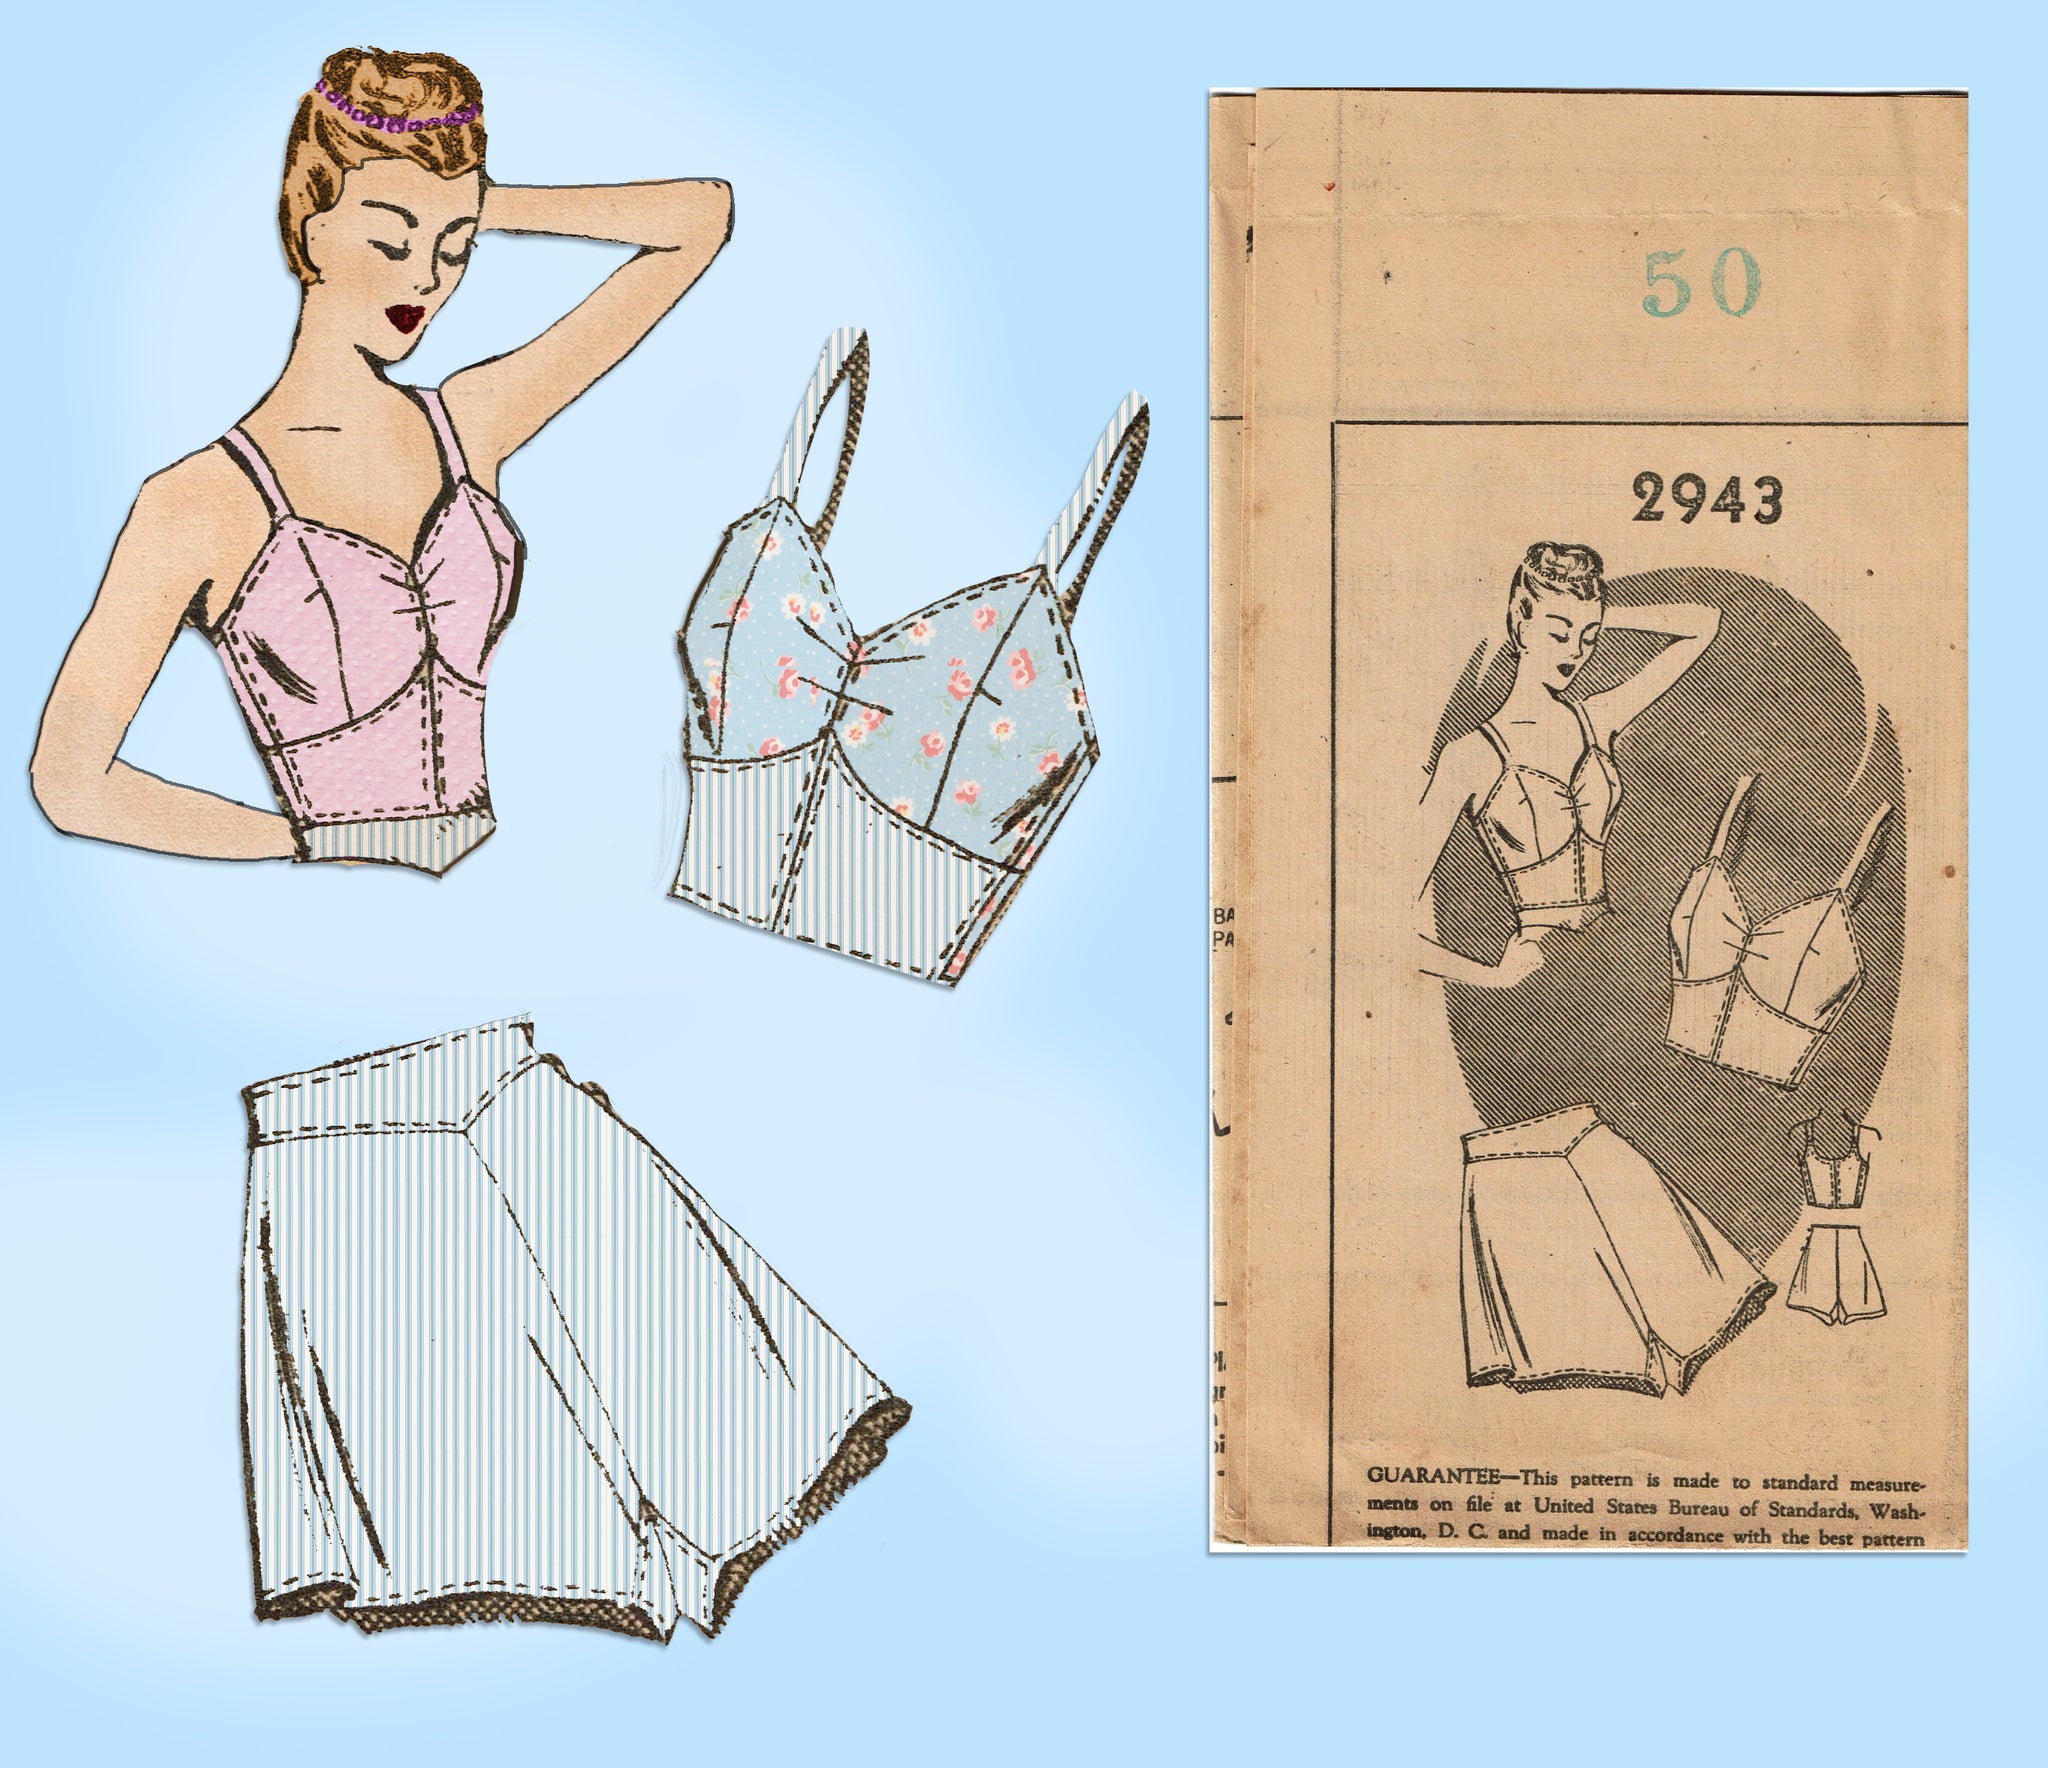 Mail Order 8936: 1940s Plus Size Slip 52 Bust Vintage Sewing Pattern –  Vintage4me2